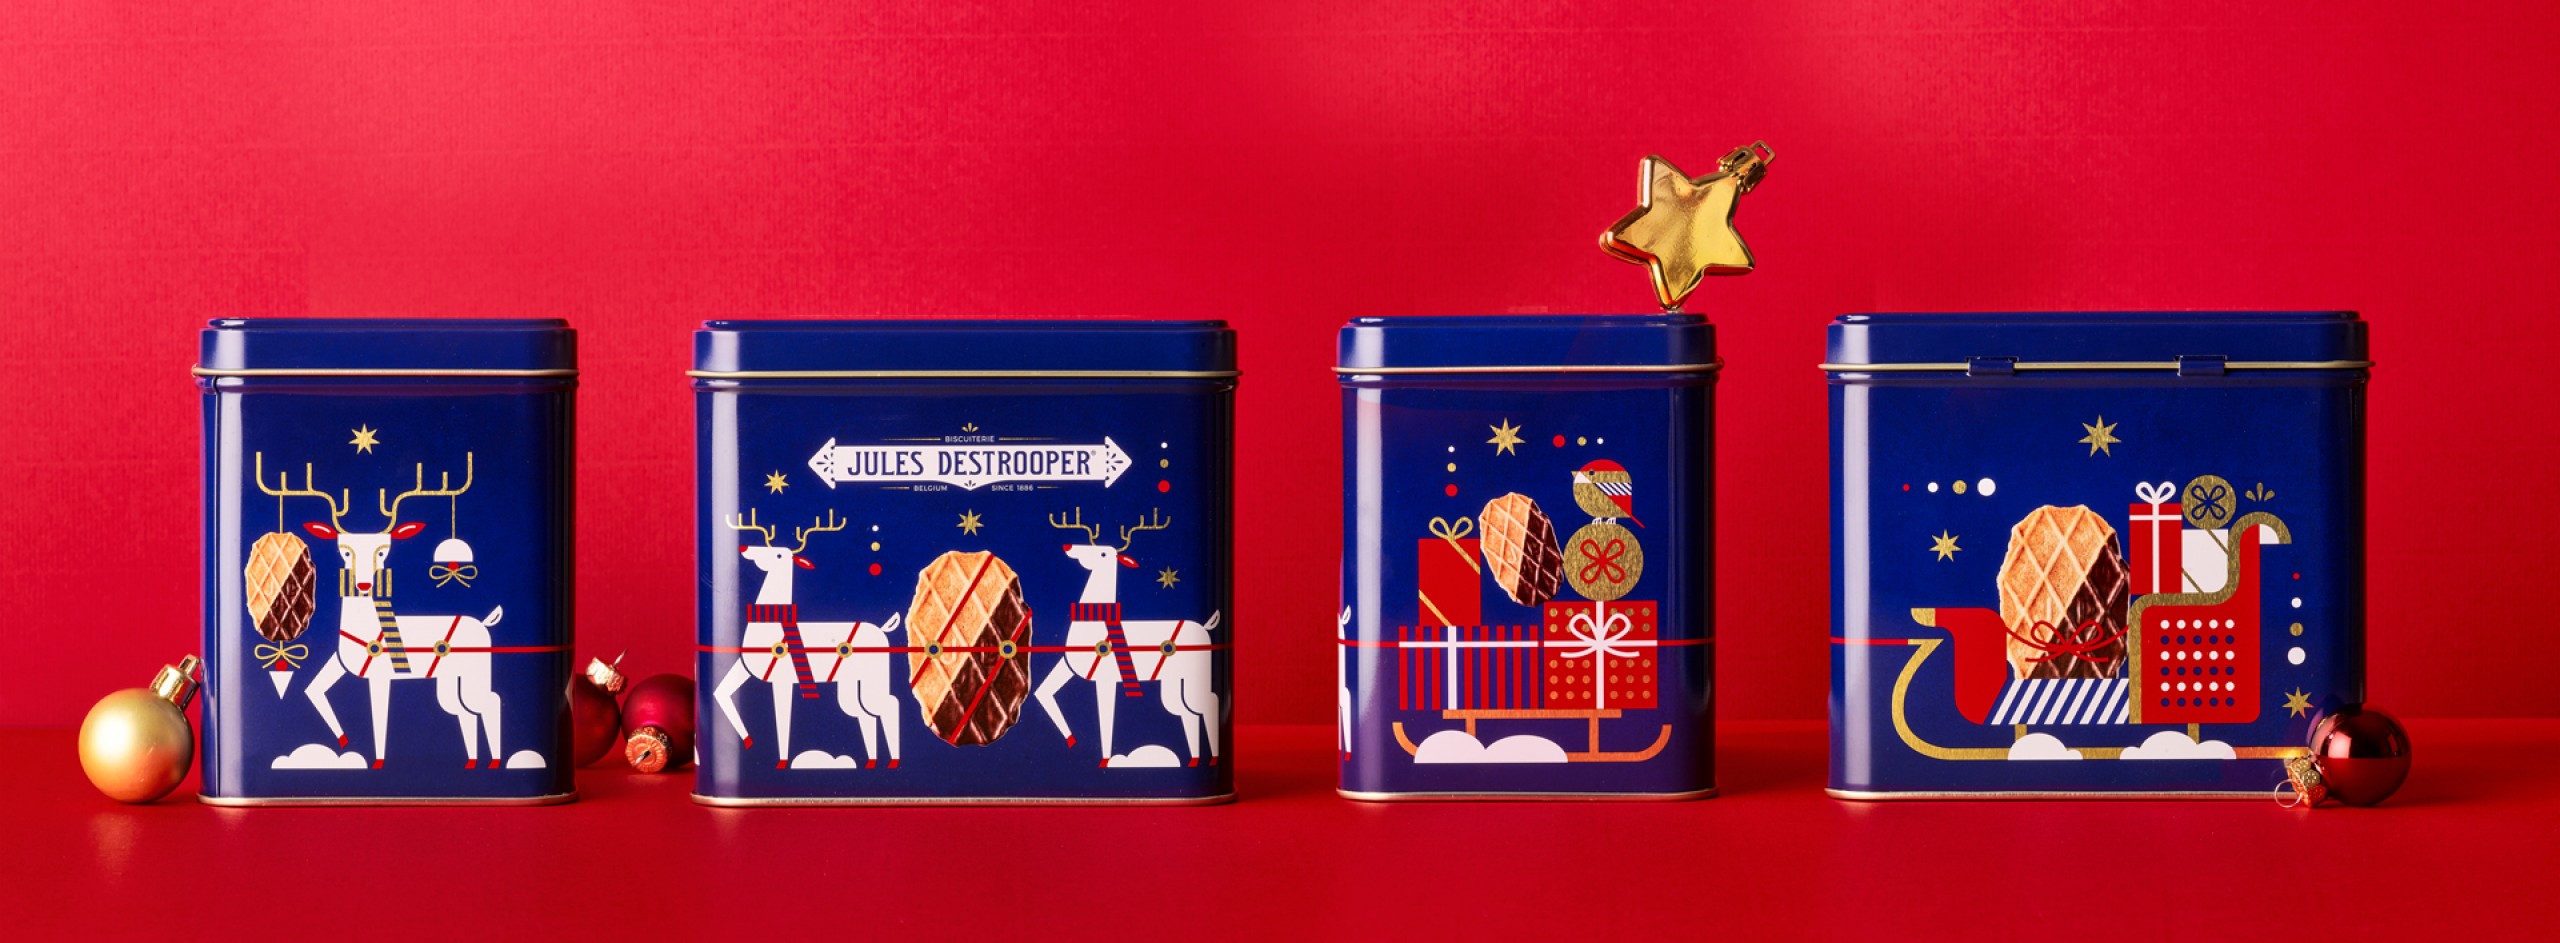 Quatre Mains package design - Package design christmas, packaging, Jules destrooper